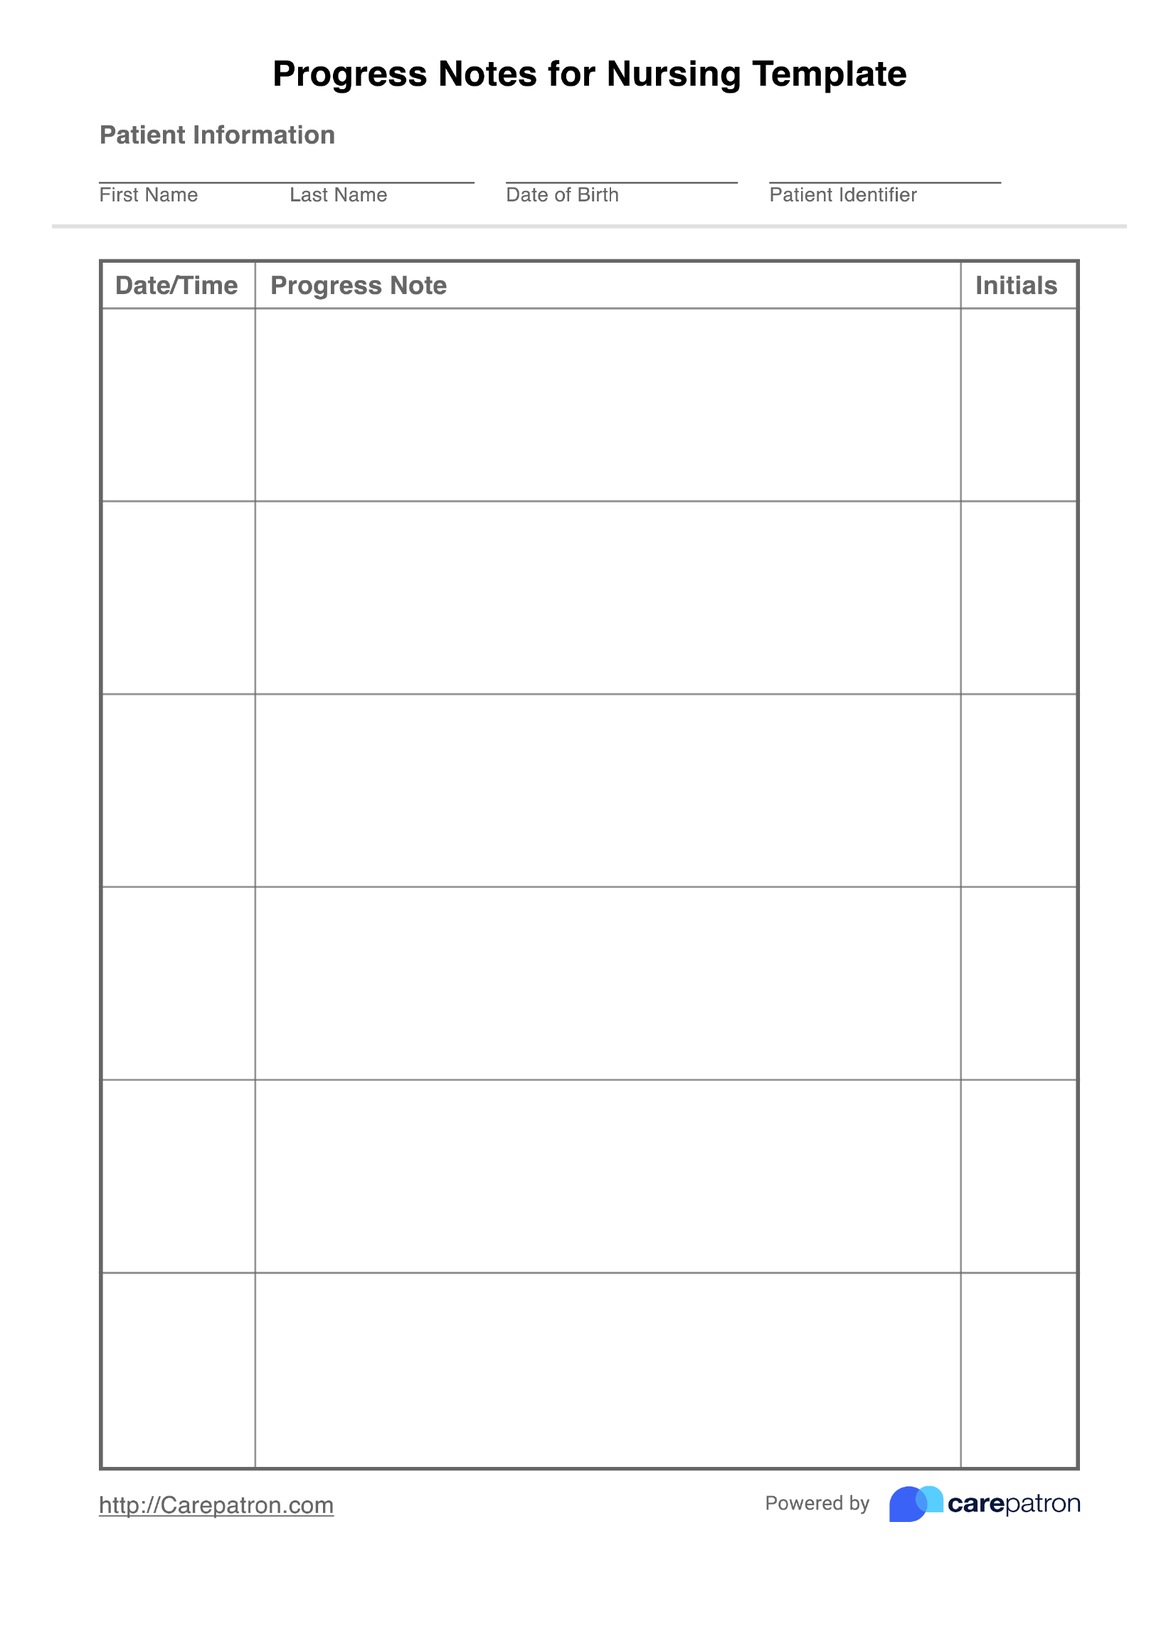 Progress Notes For Nursing Template PDF Example